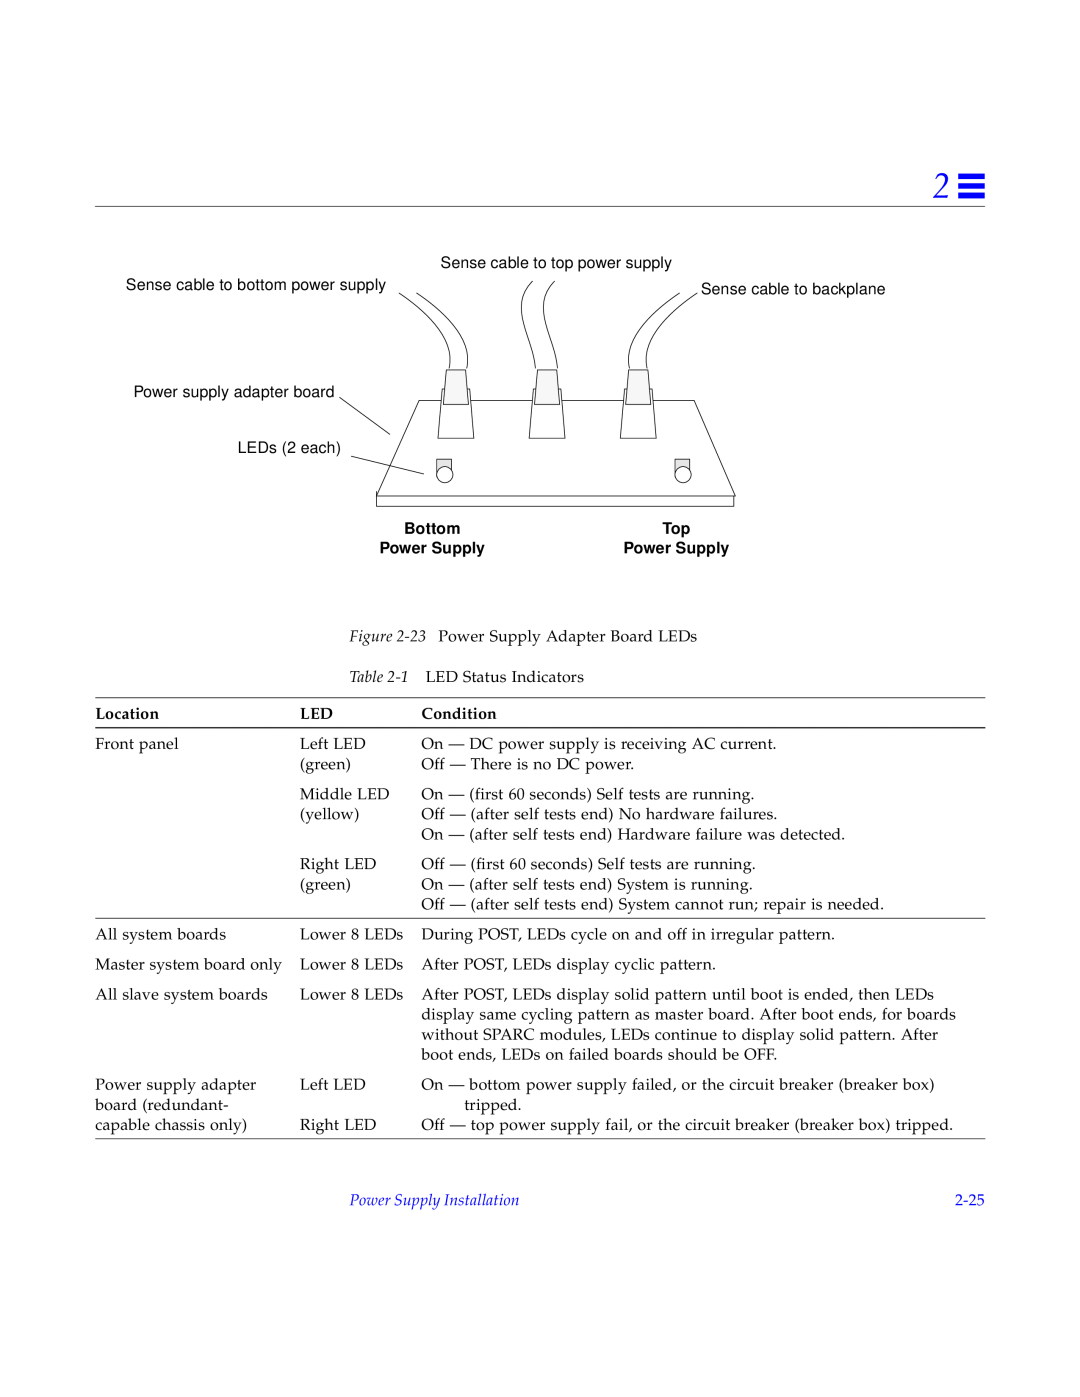 Sun Microsystems 2000E installation manual Bottom, Location, Condition, Power Supply Installation, 2-25 